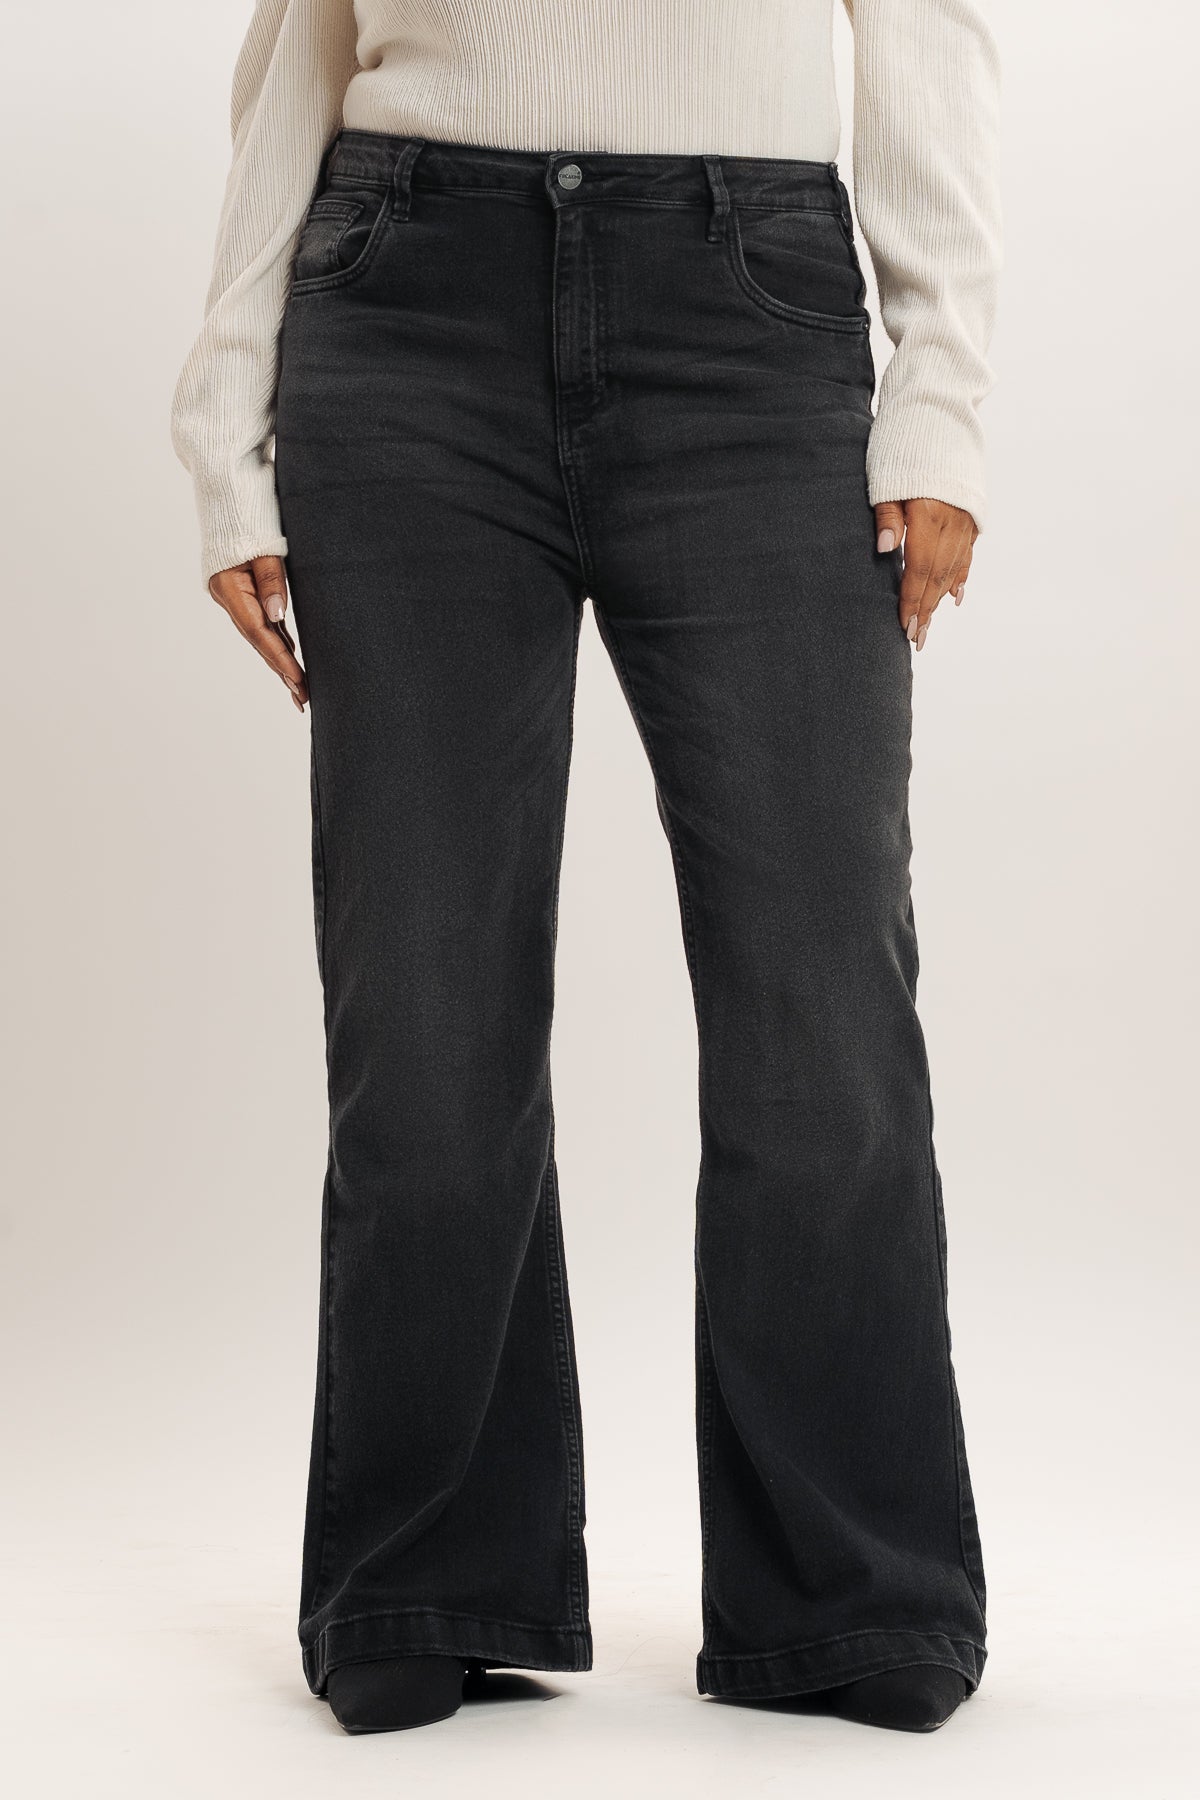 Women Bootcut jeans Black Stretchable ladies Wide Leg denim Pants